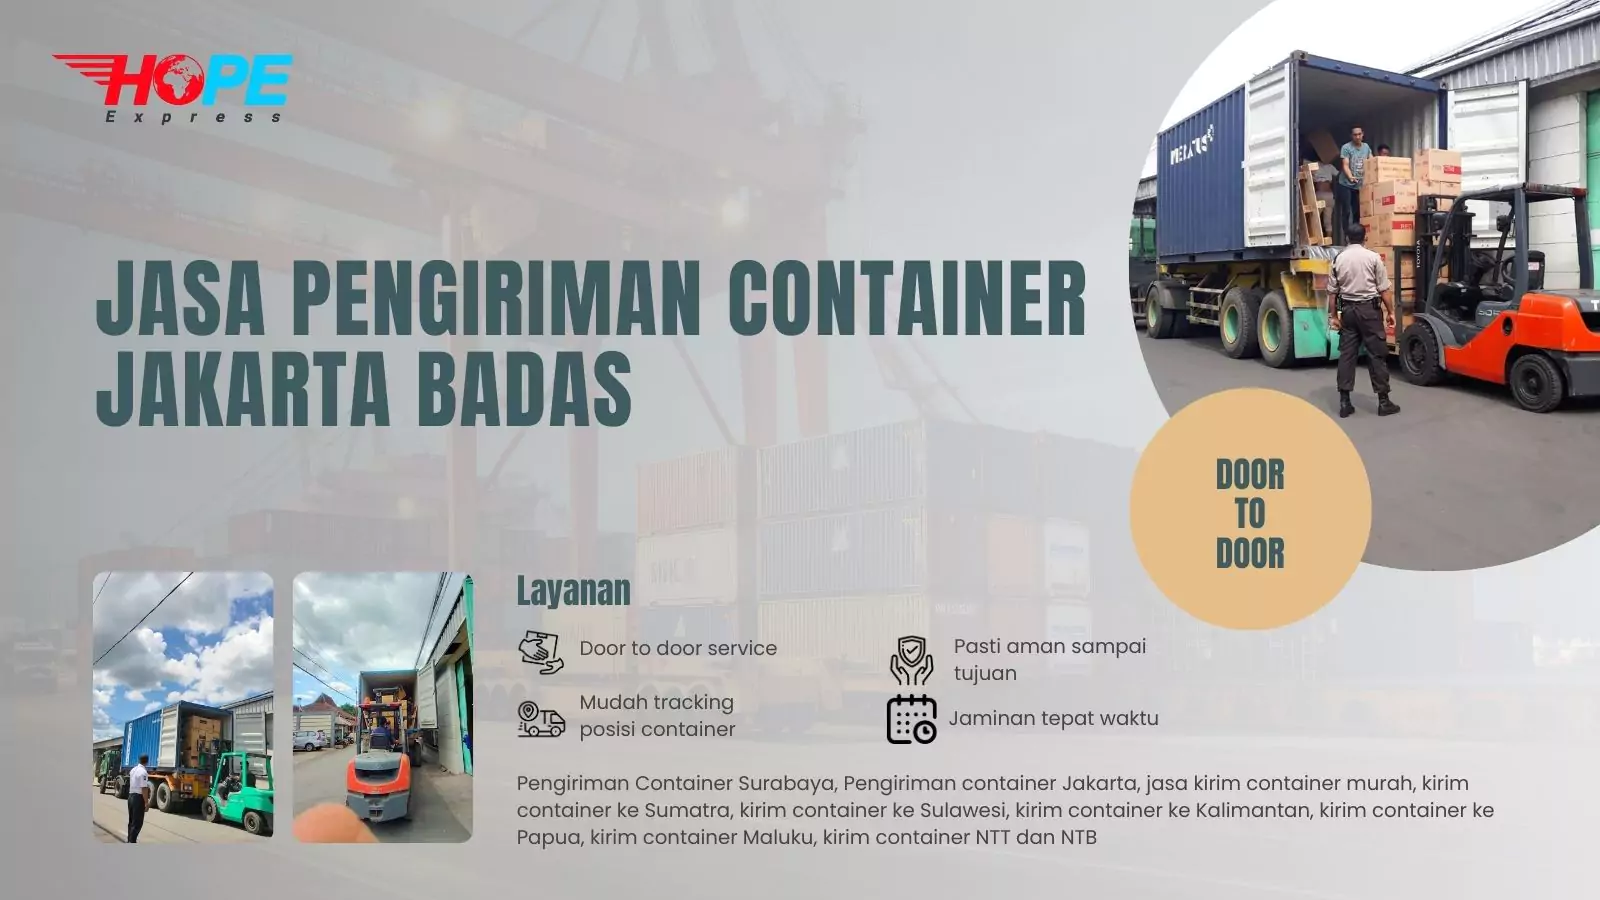 Jasa Pengiriman Container Jakarta Badas